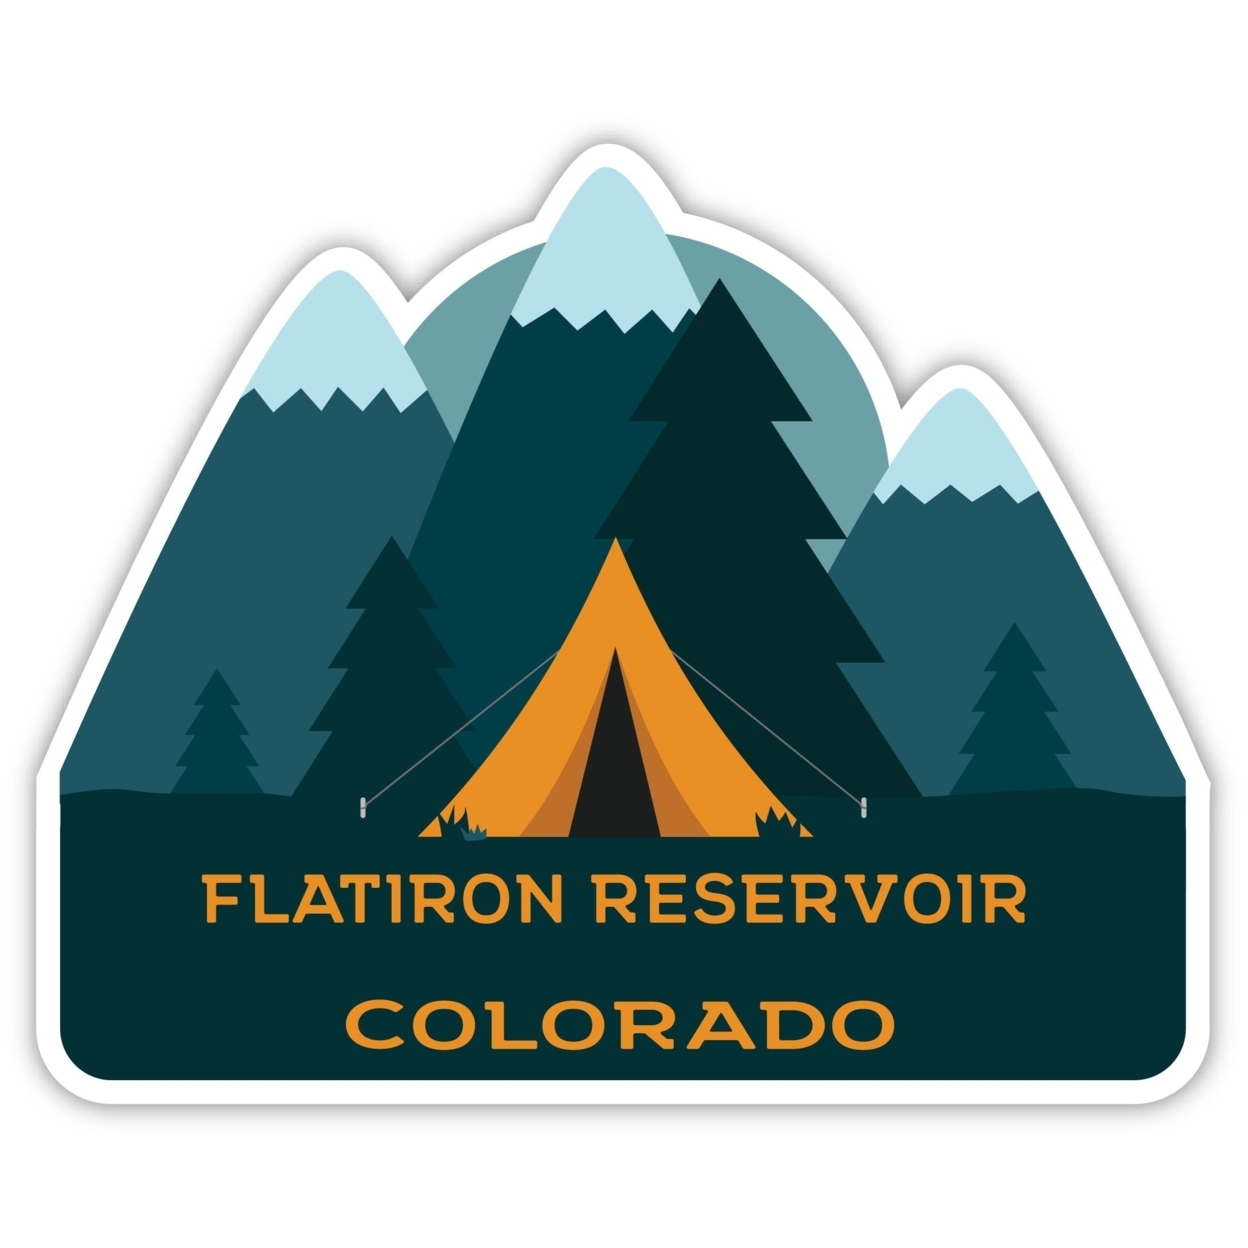 Flatiron Reservoir Colorado Souvenir Decorative Stickers (Choose Theme And Size) - 4-Pack, 10-Inch, Tent